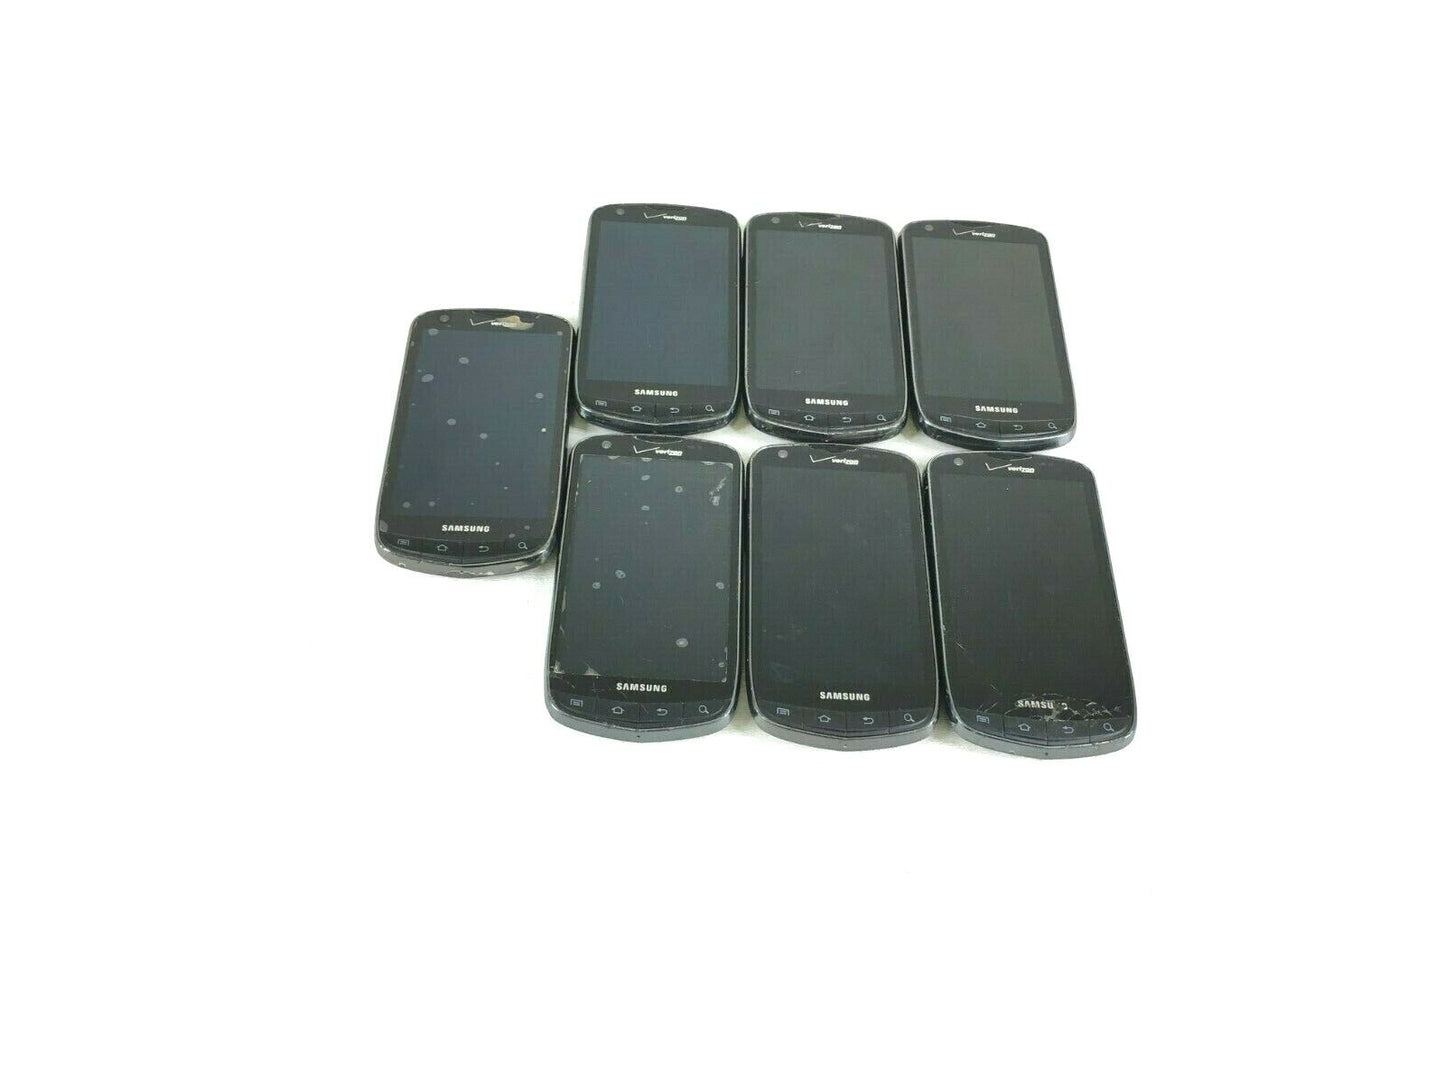 LOT OF 7 Samsung Droid SCH-I510 Black (Verizon) Smartphone